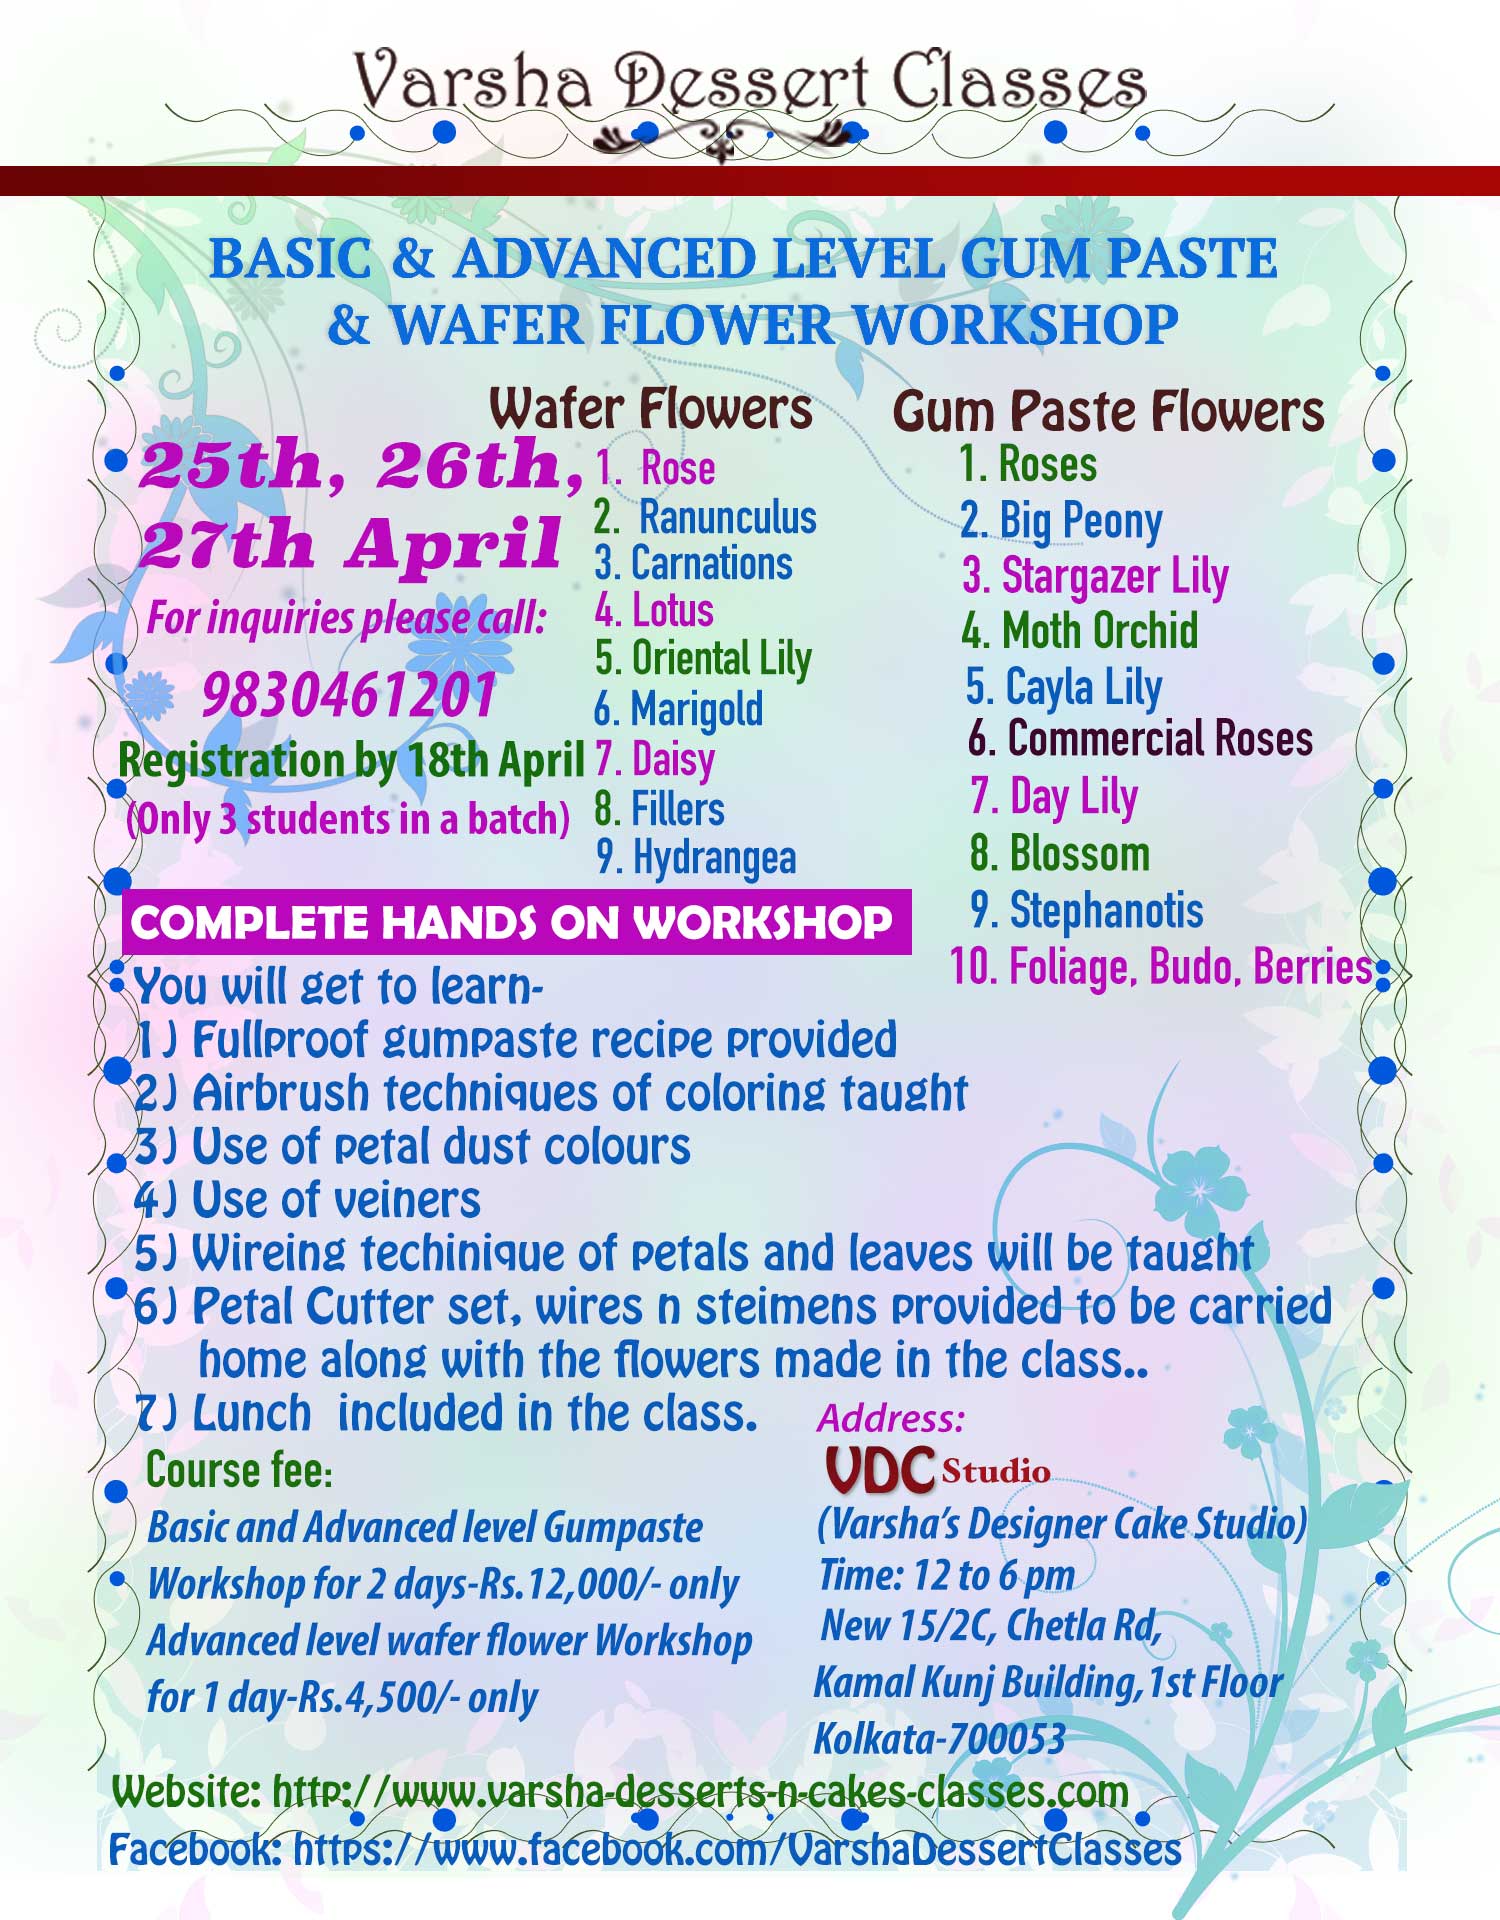 Advanced Level Gum Paste & Wafer Flower Workshop on 25th, 26th, 27th April